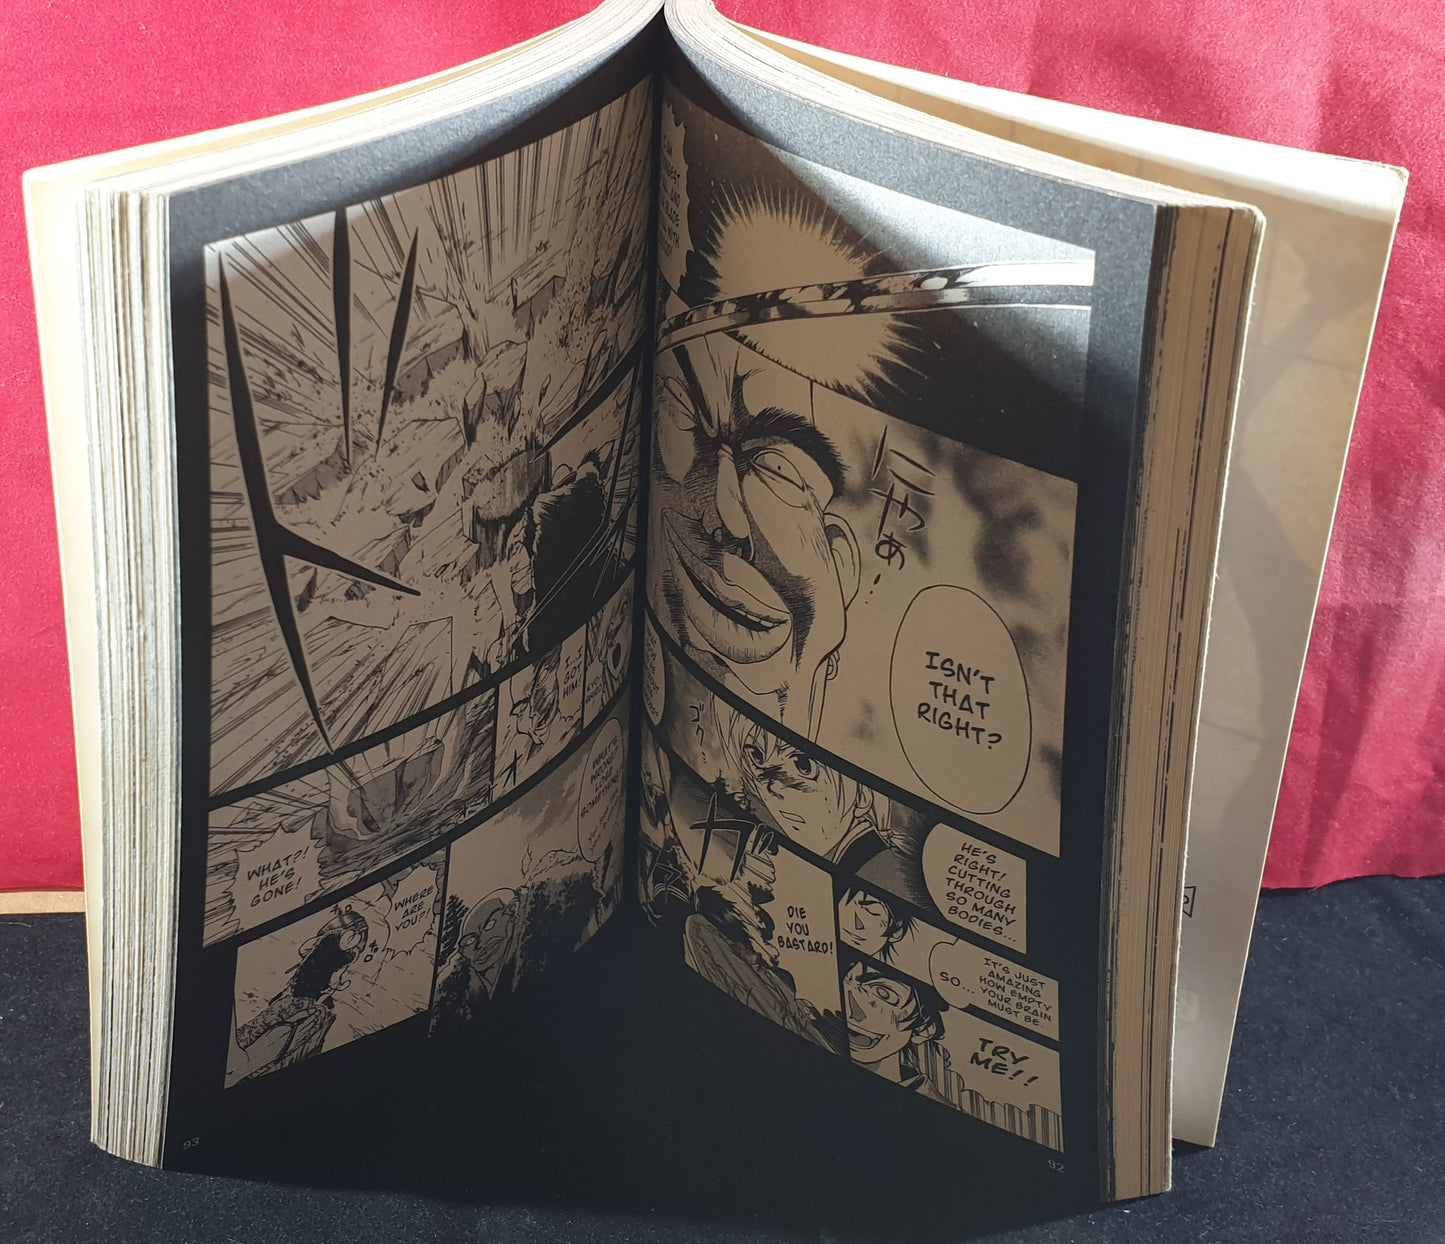 Samurai Deeper Kyo Volume 1 Graphic Novel Book